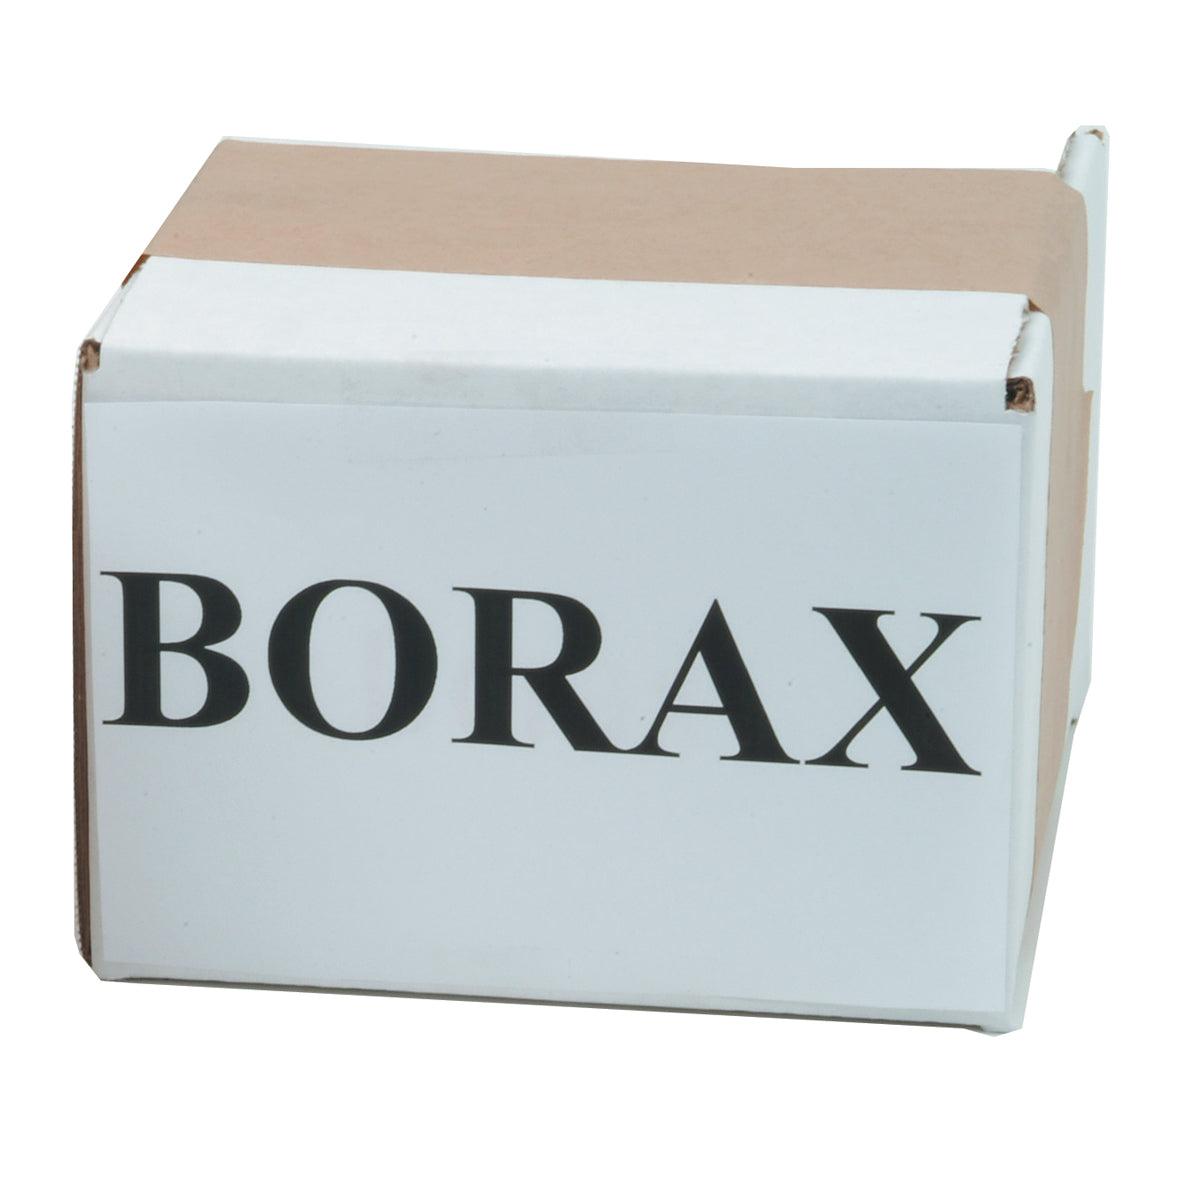 File:Using borax flux.JPG - Wikimedia Commons